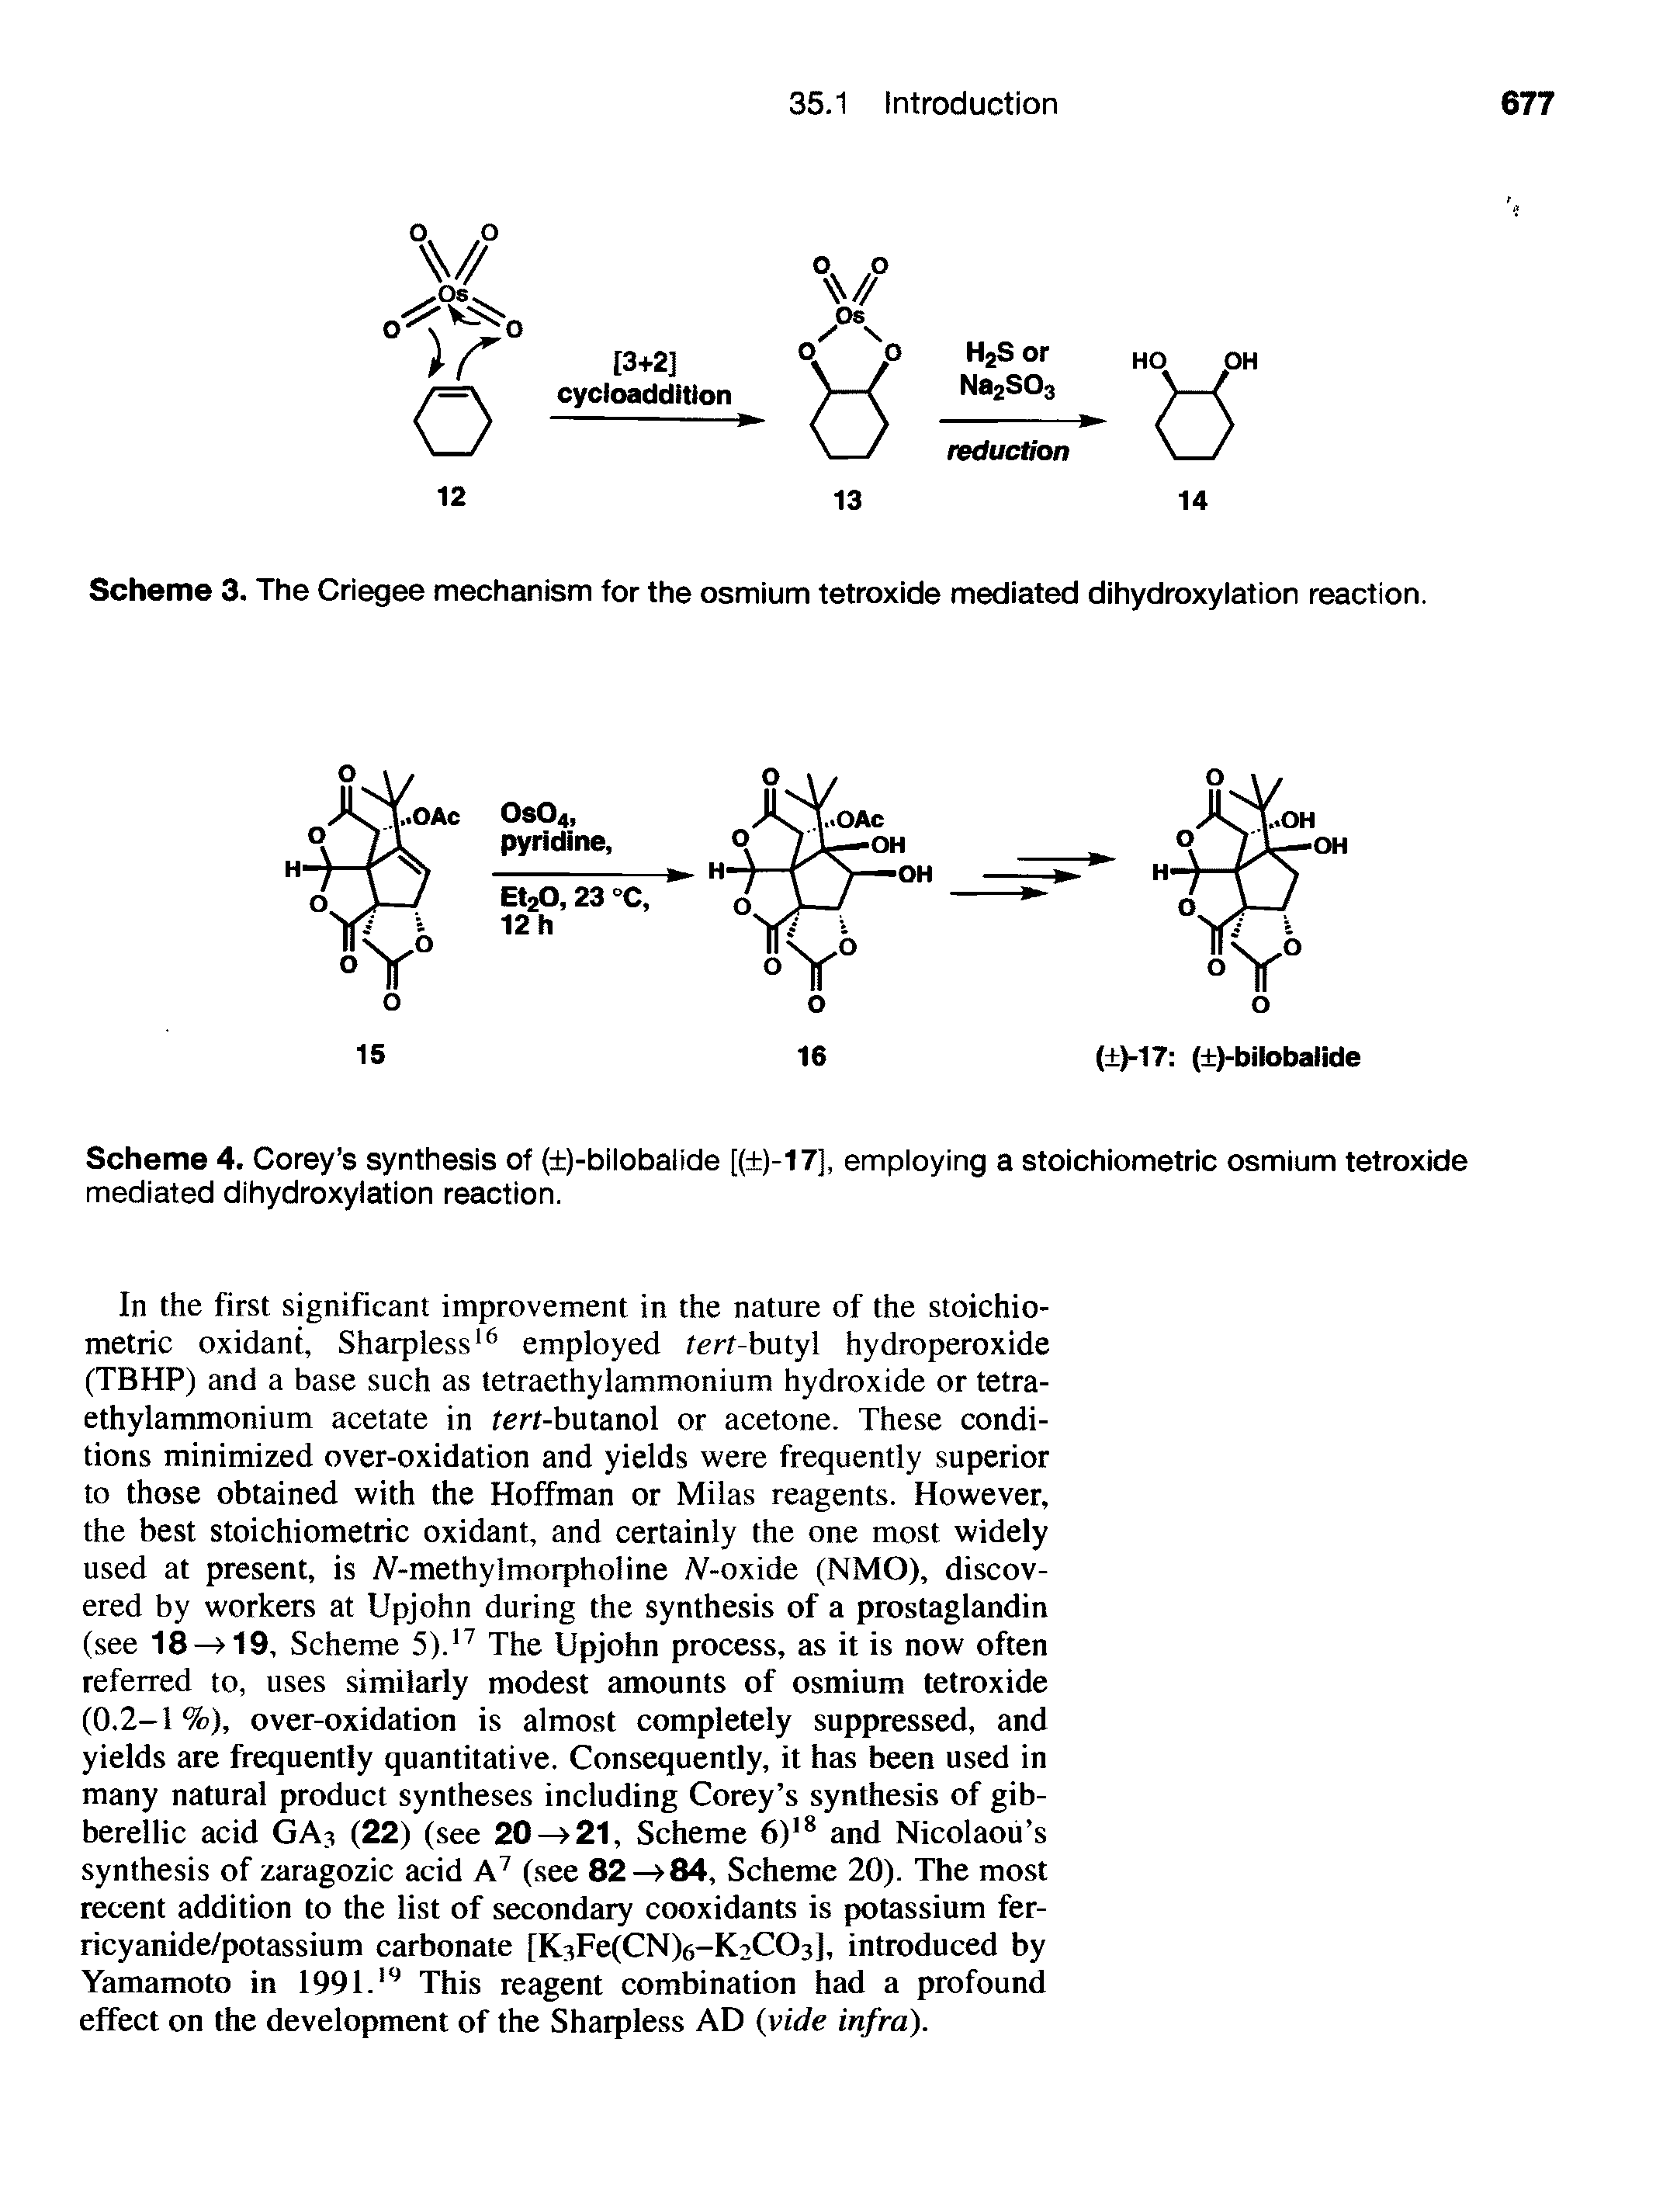 Scheme 4. Corey s synthesis of ( )-bilobalide [( )-l7], employing a stoichiometric osmium tetroxide mediated dihydroxylation reaction.